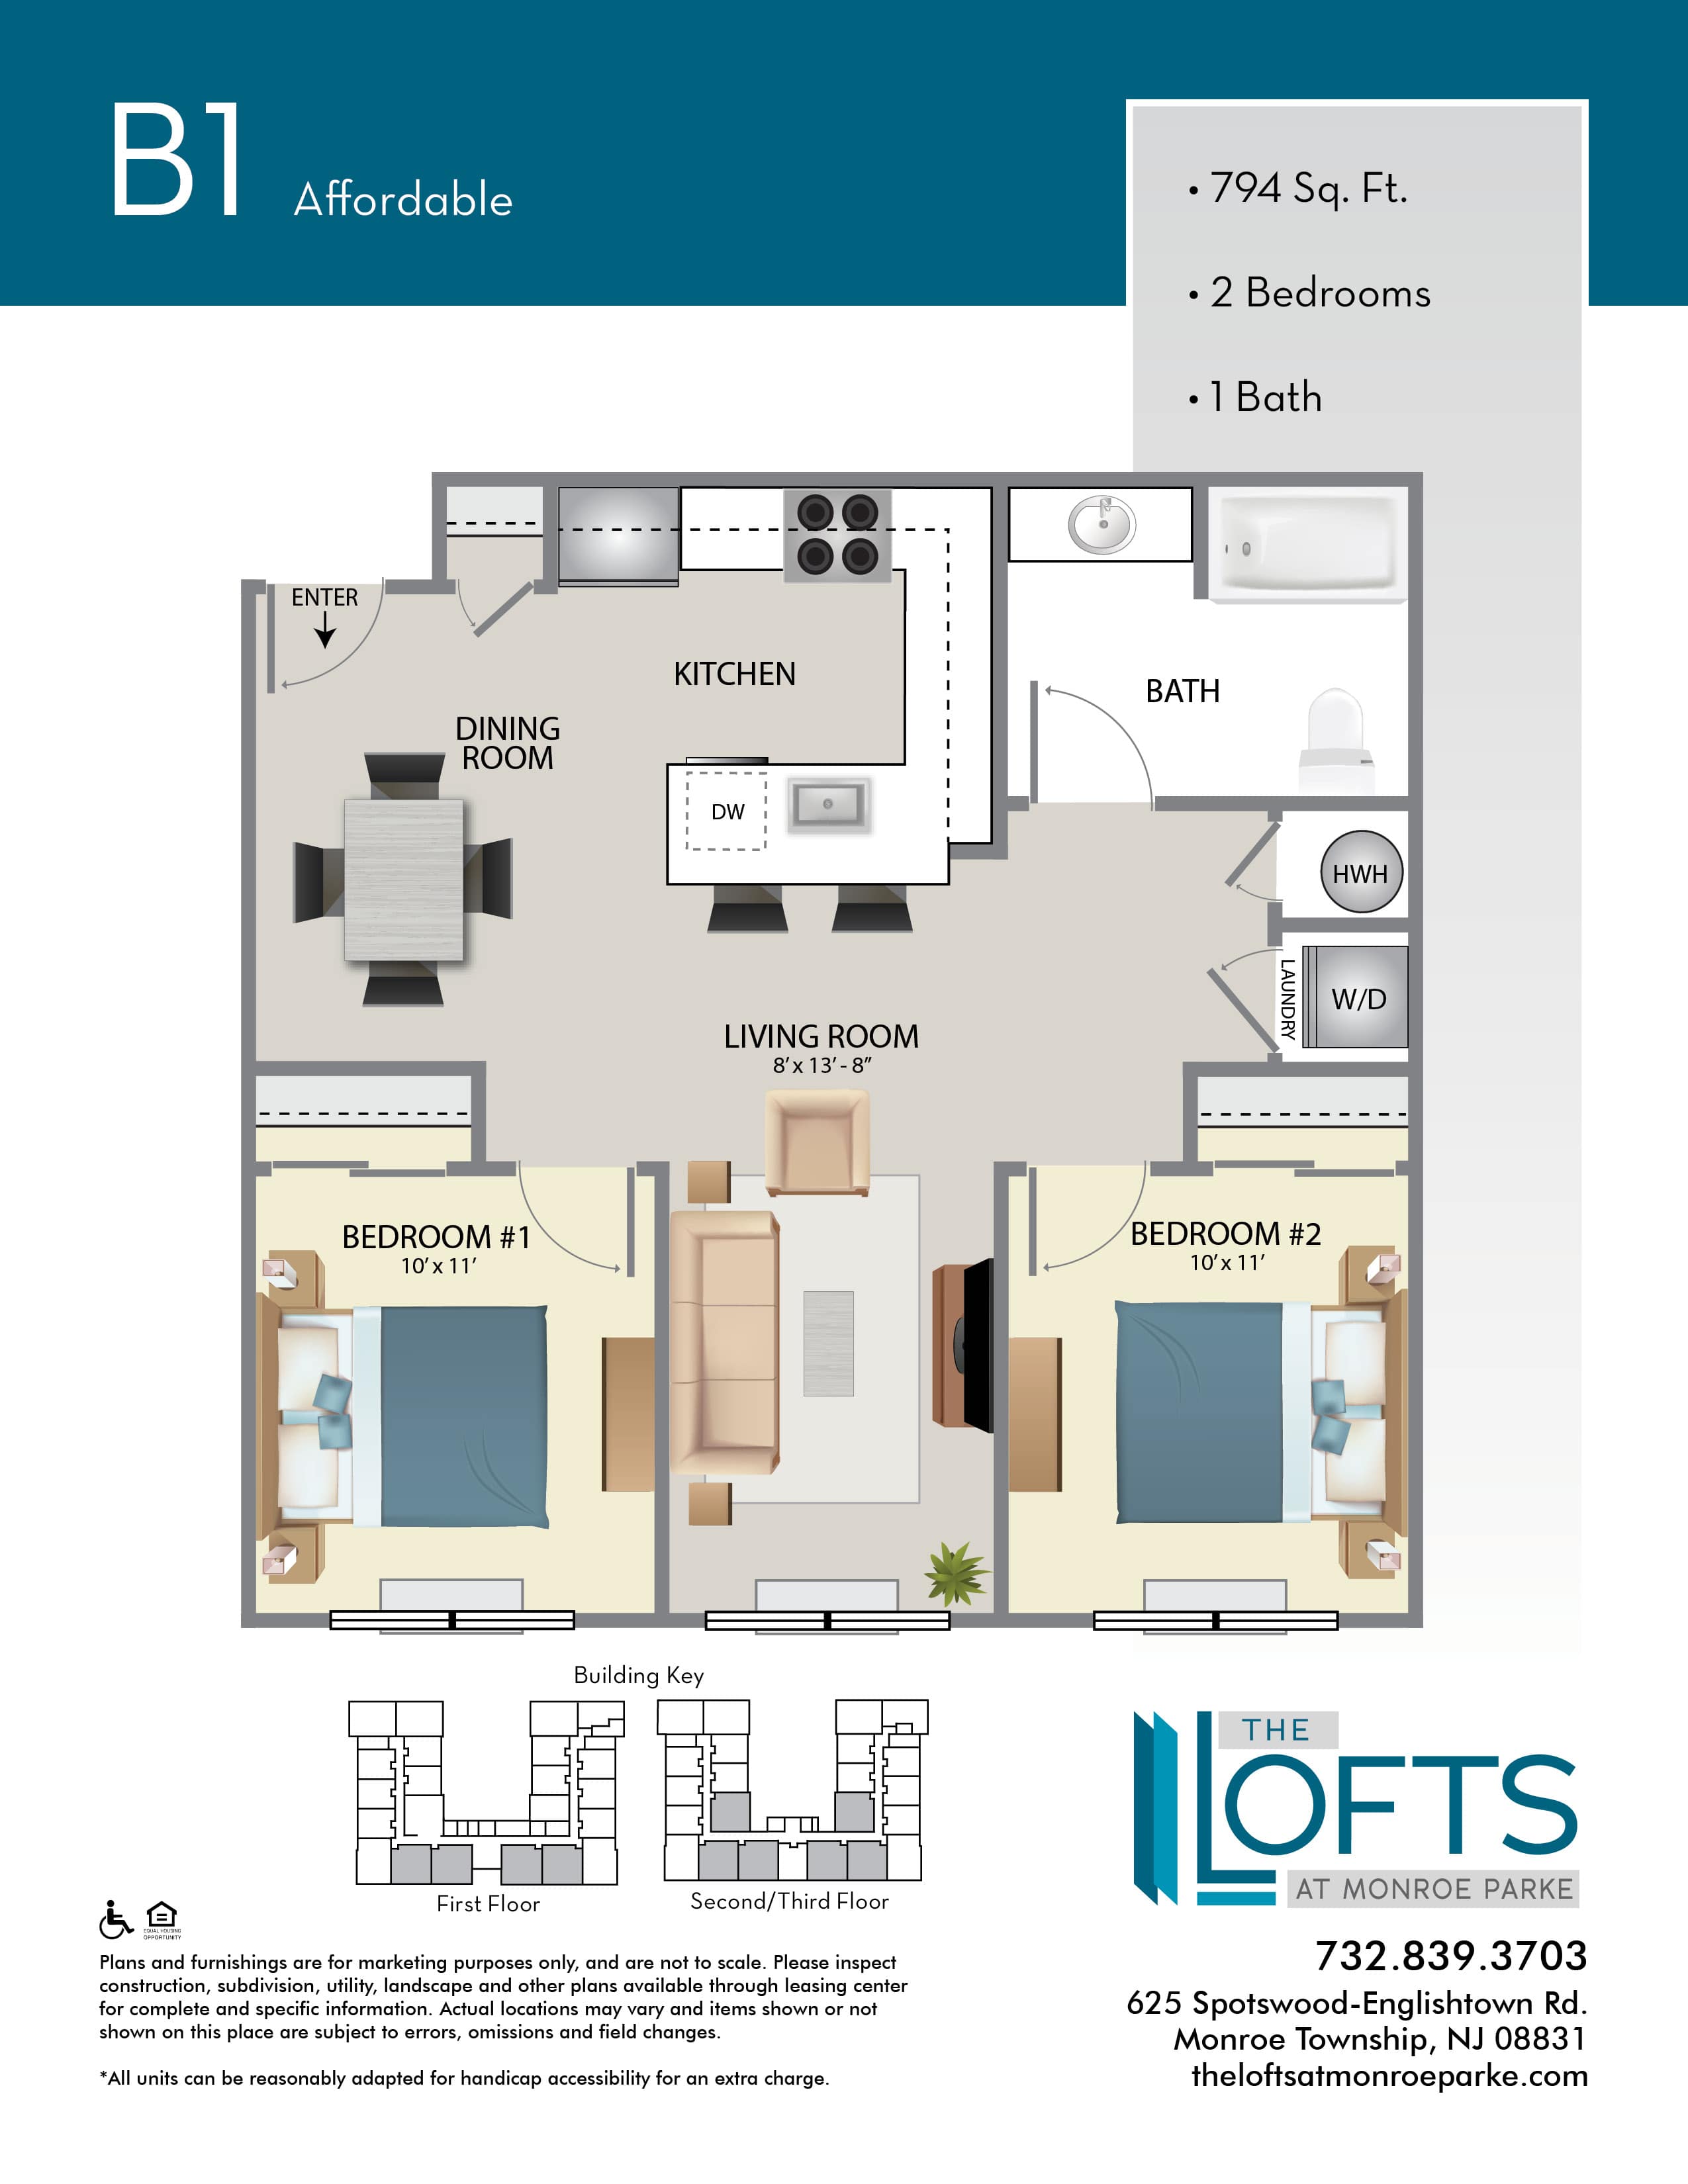 The Lofts at Monroe Park Apartment Floor Plan 2-B2-3